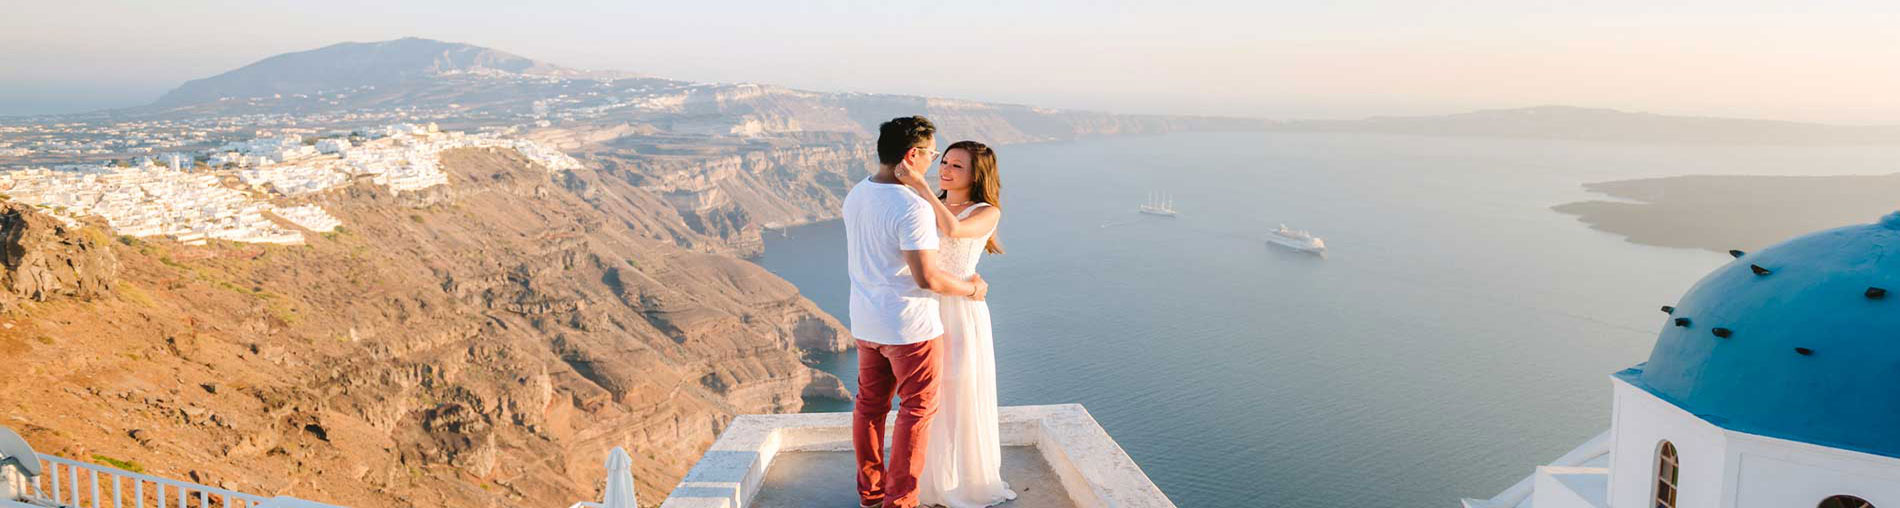 Greece Honeymoon Holiday Package - 6 Nights